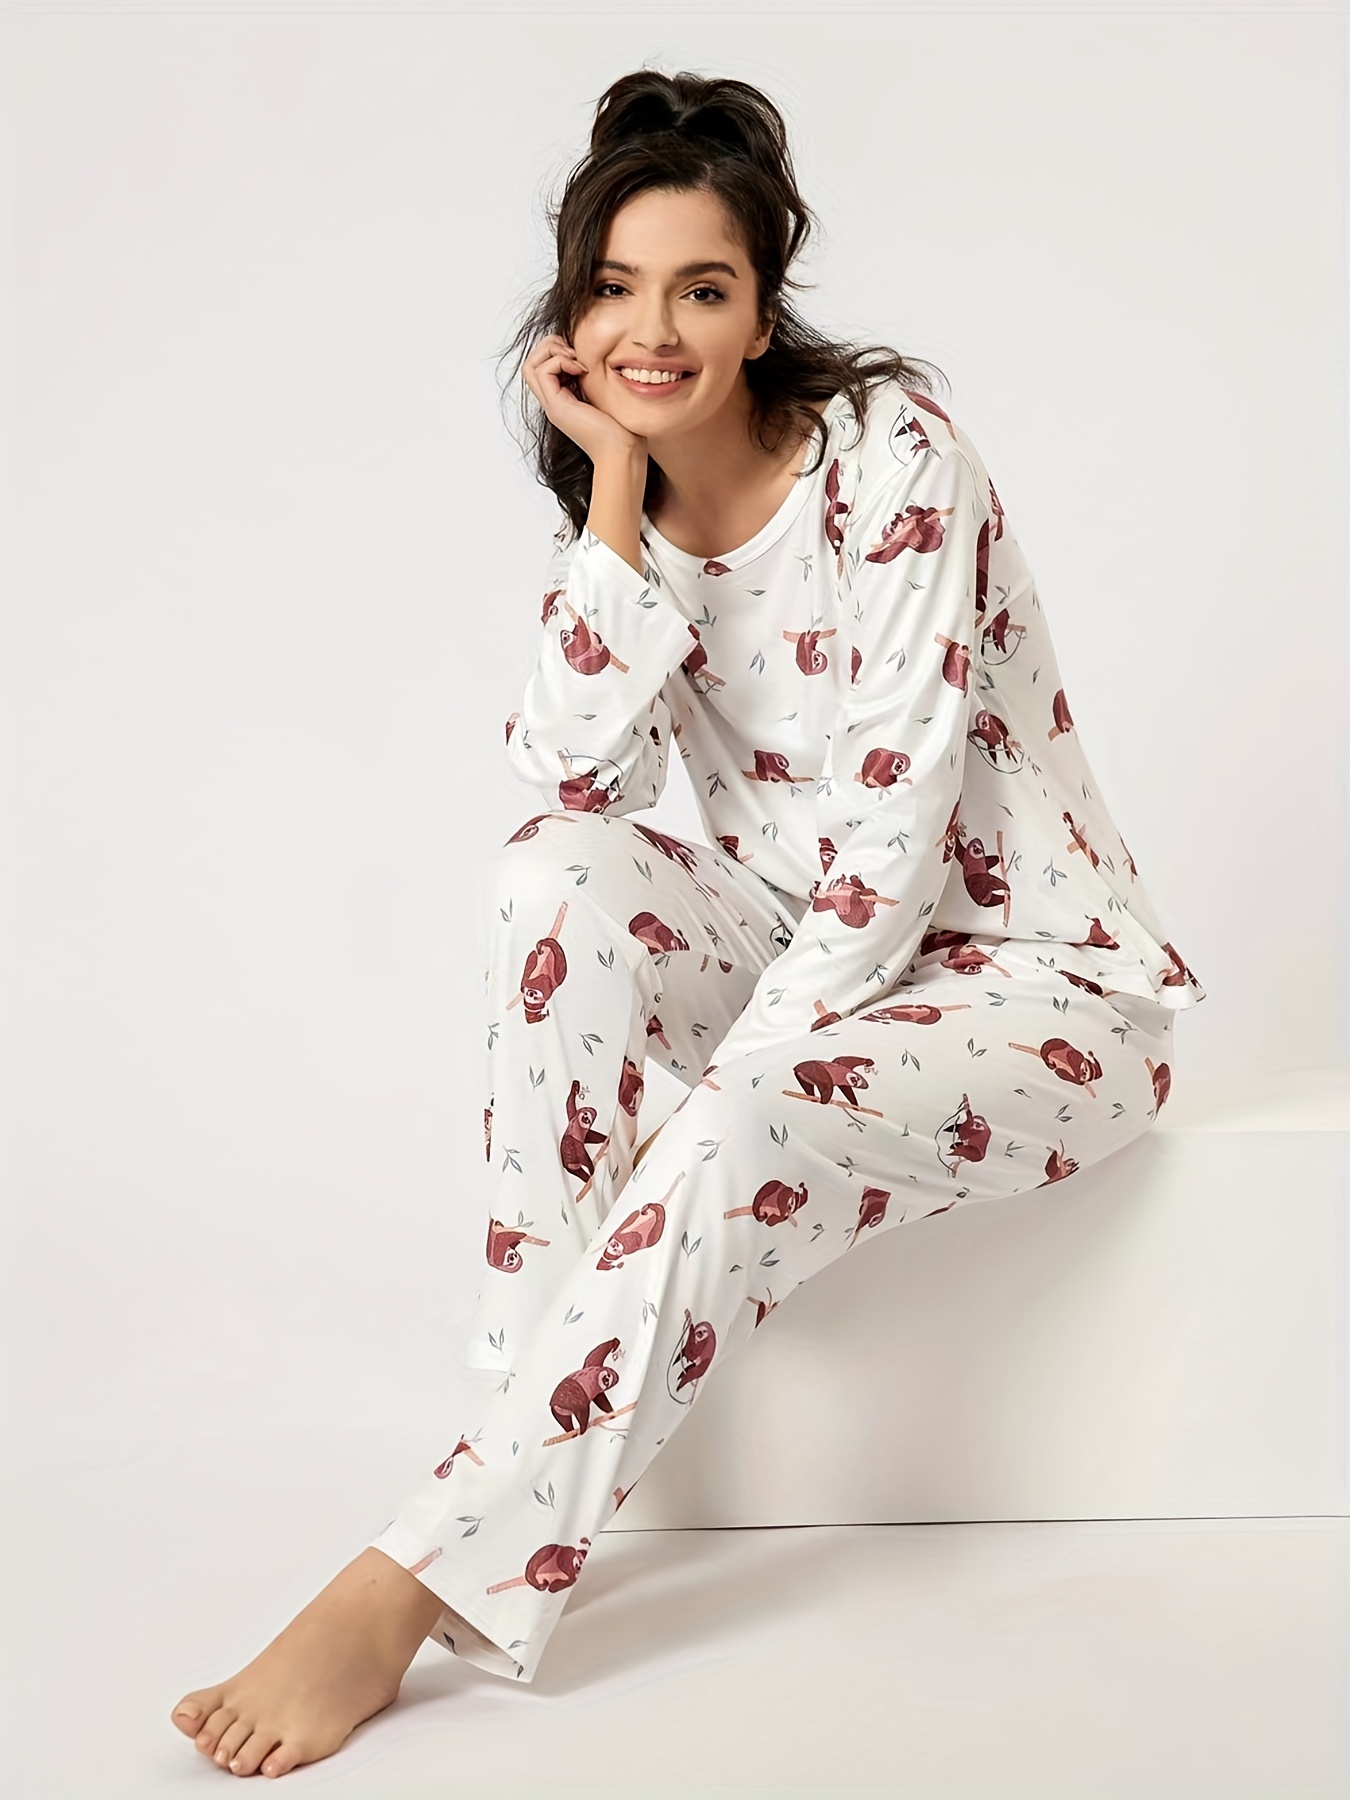 MANBEIYA Women's Pajama Sets Button Down Soft Long Sleeve